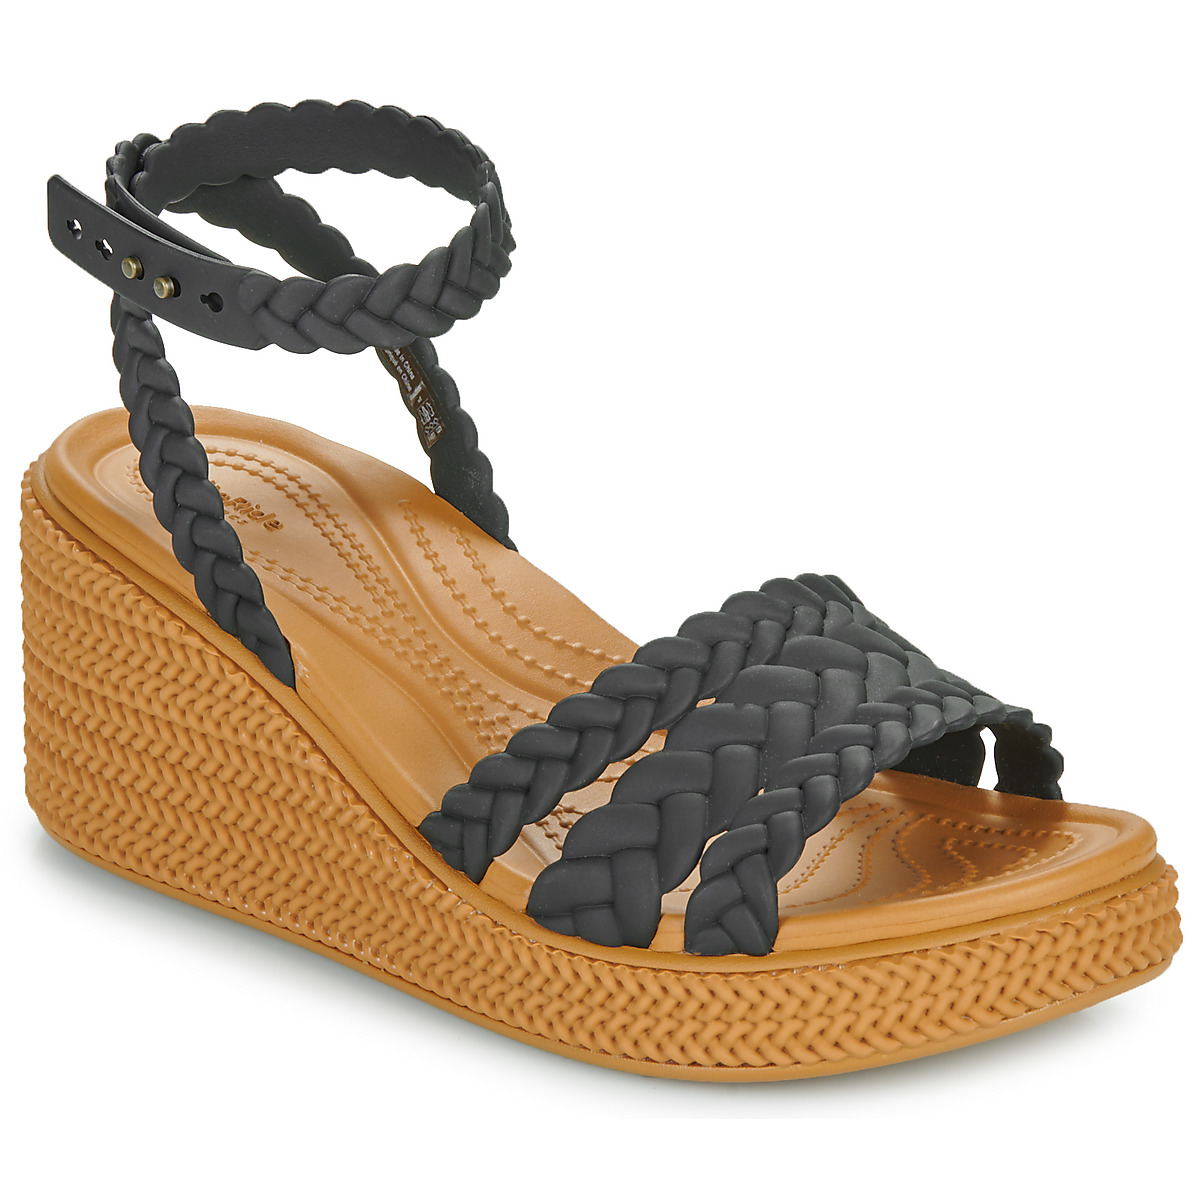 Crocs Brooklyn Woven Ankle Strap Wdg Black